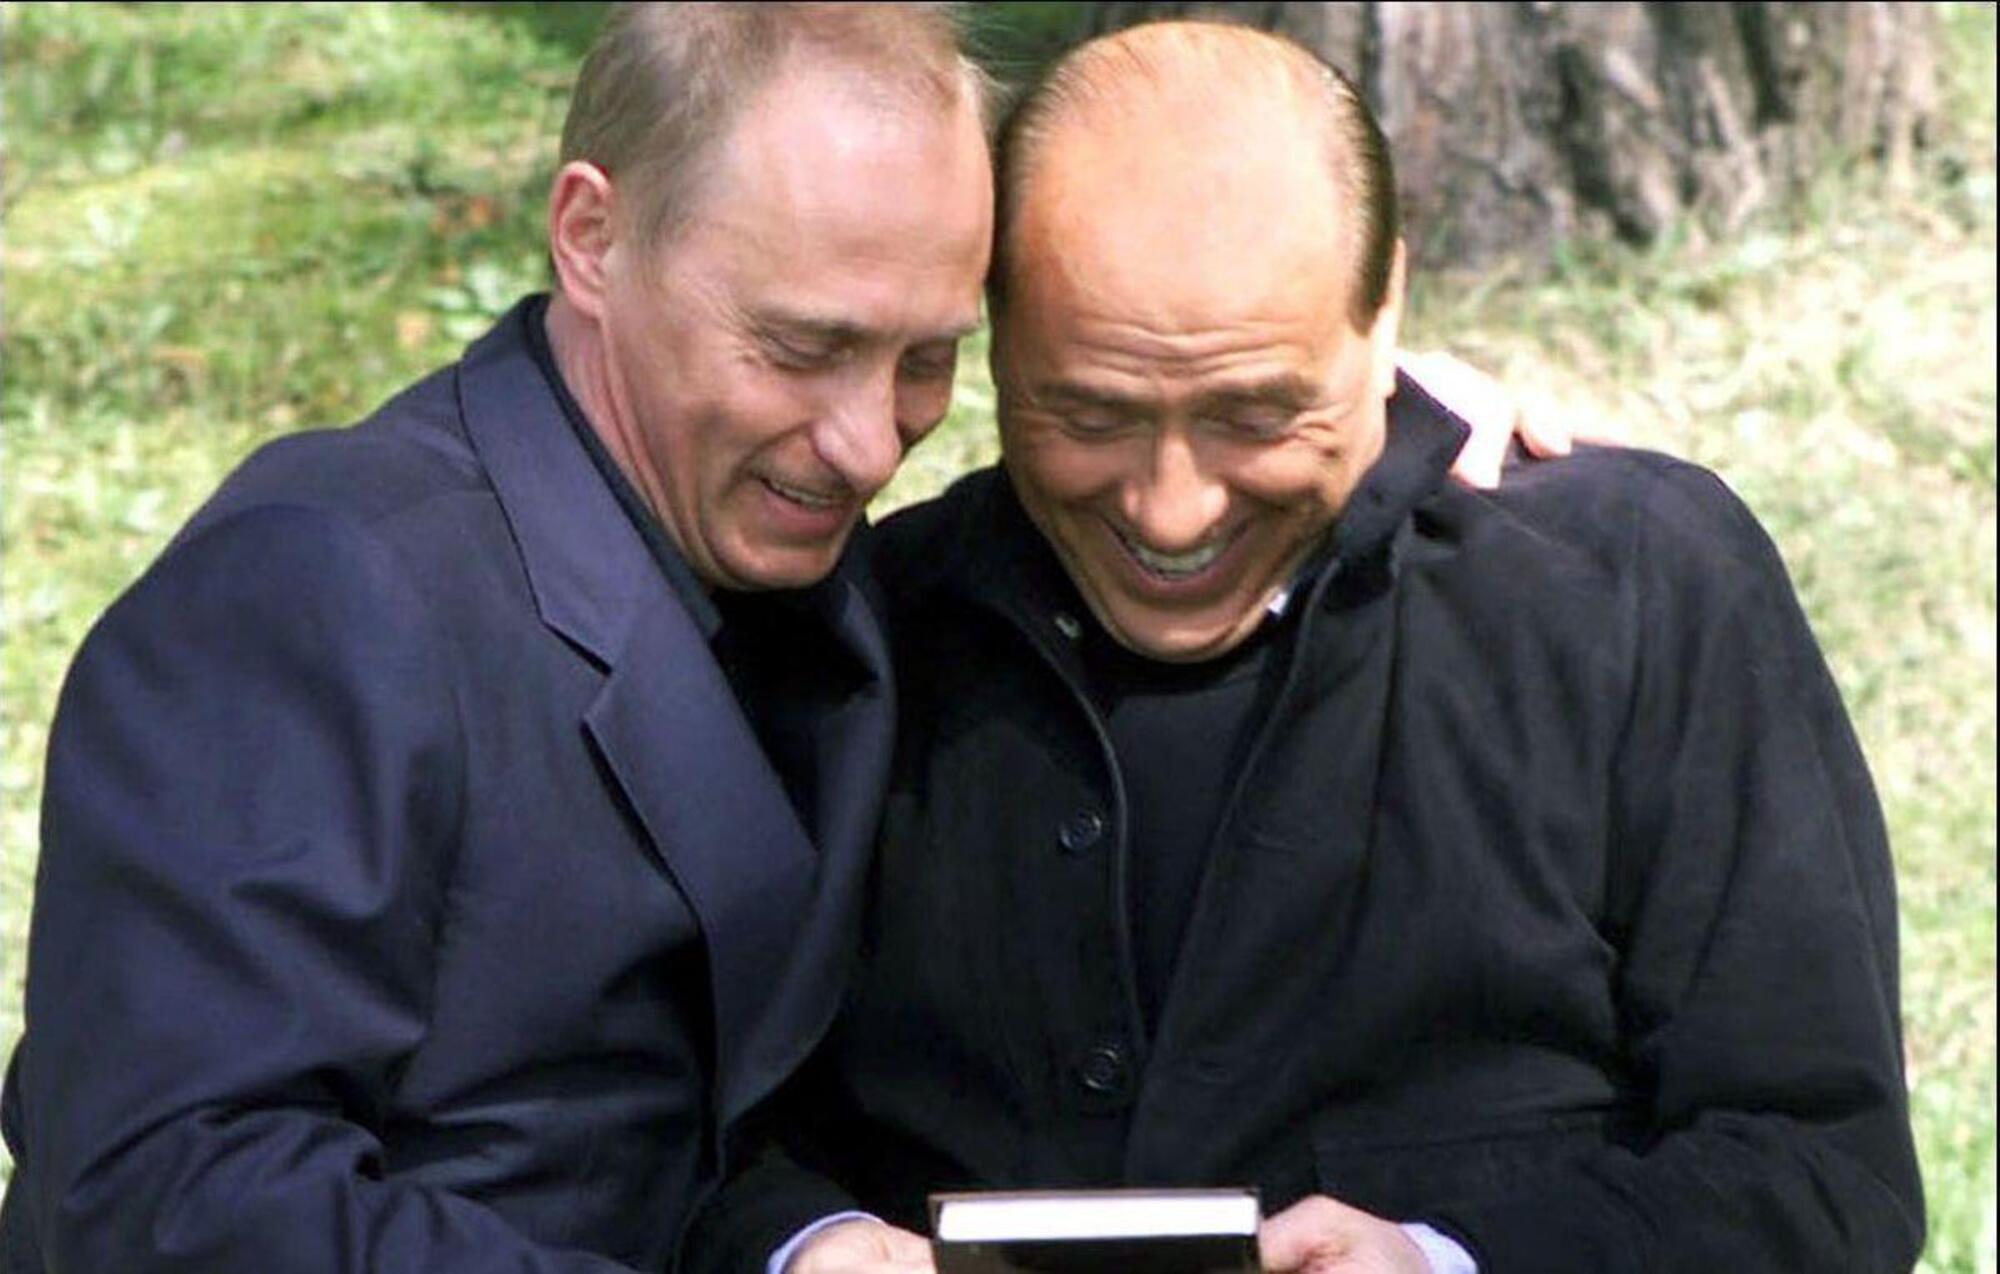 Putin e Berlusconi